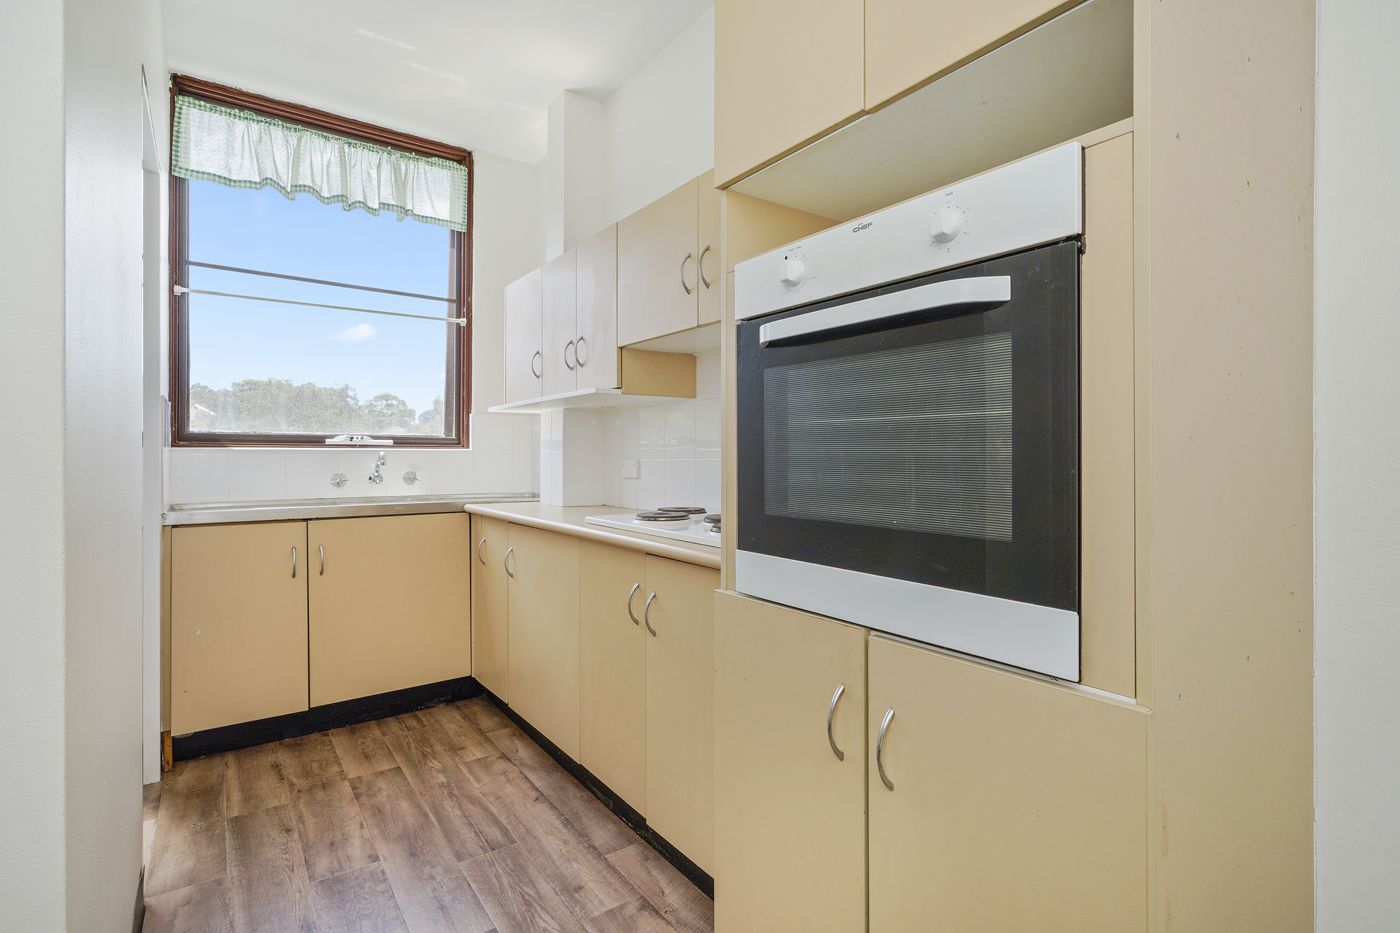 2 bedrooms Apartment / Unit / Flat in 22/154 Croydon Avenue ASHFIELD NSW, 2131